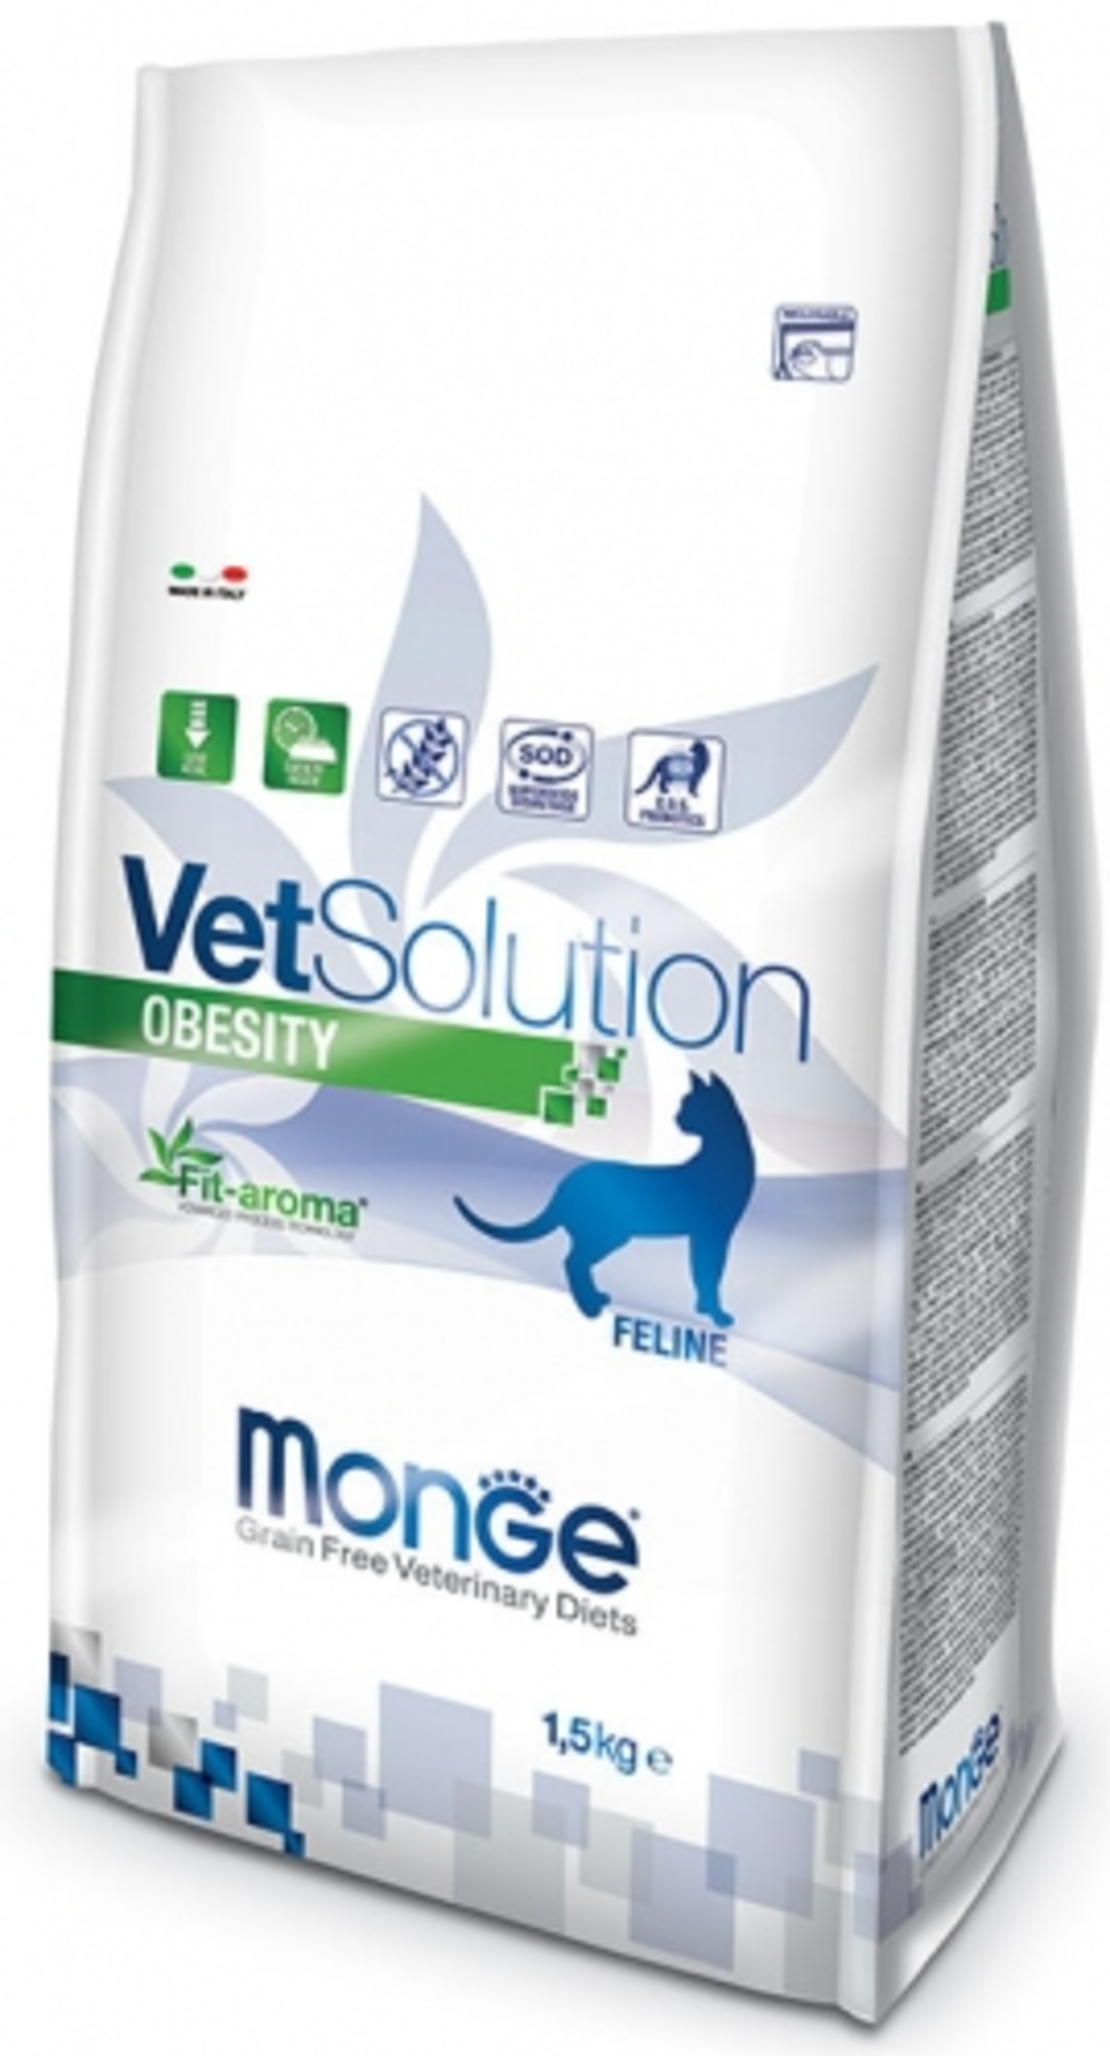 MONGE VetSolution מונג' וט סולושן אוביסיטי מזון רפואי לחתולים 1.5 ק